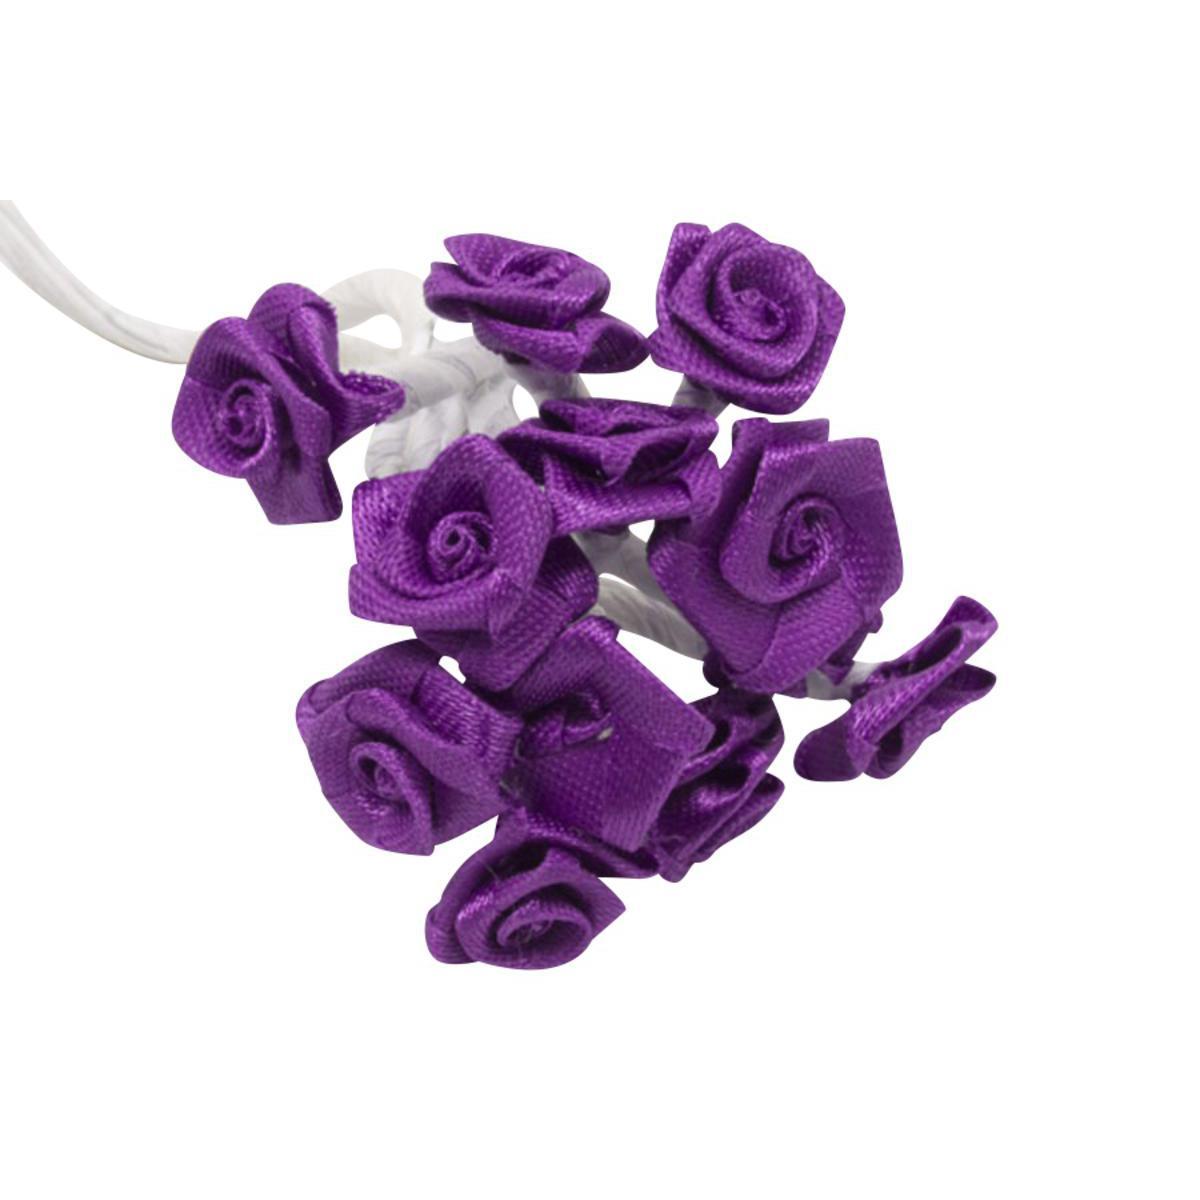 72 mini roses décoratives - Polyester - ø 1,5 cm - Violet prune